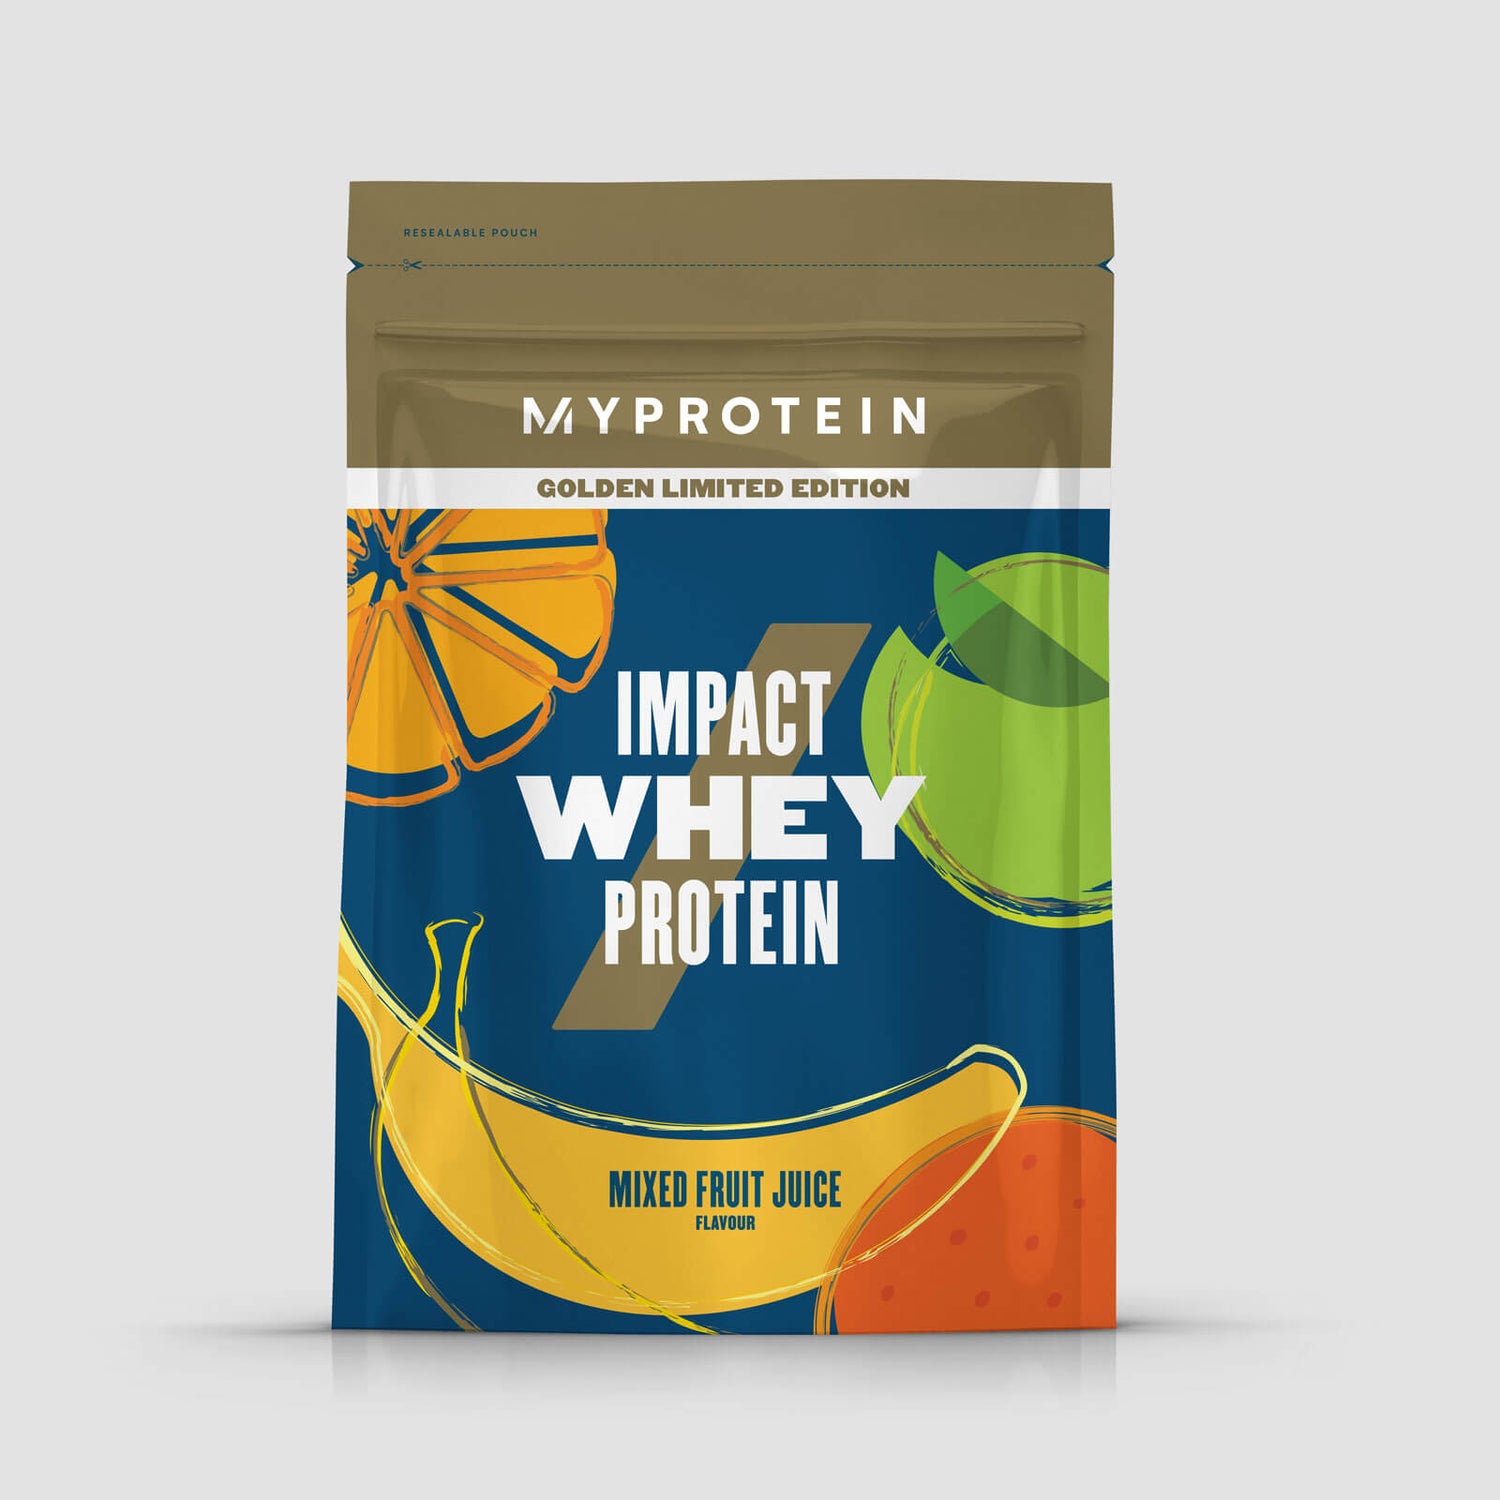 Myprotein Impact Whey Protein, Mixed Fruit Juice (ALT) - 250g - Mixed Fruit Juice